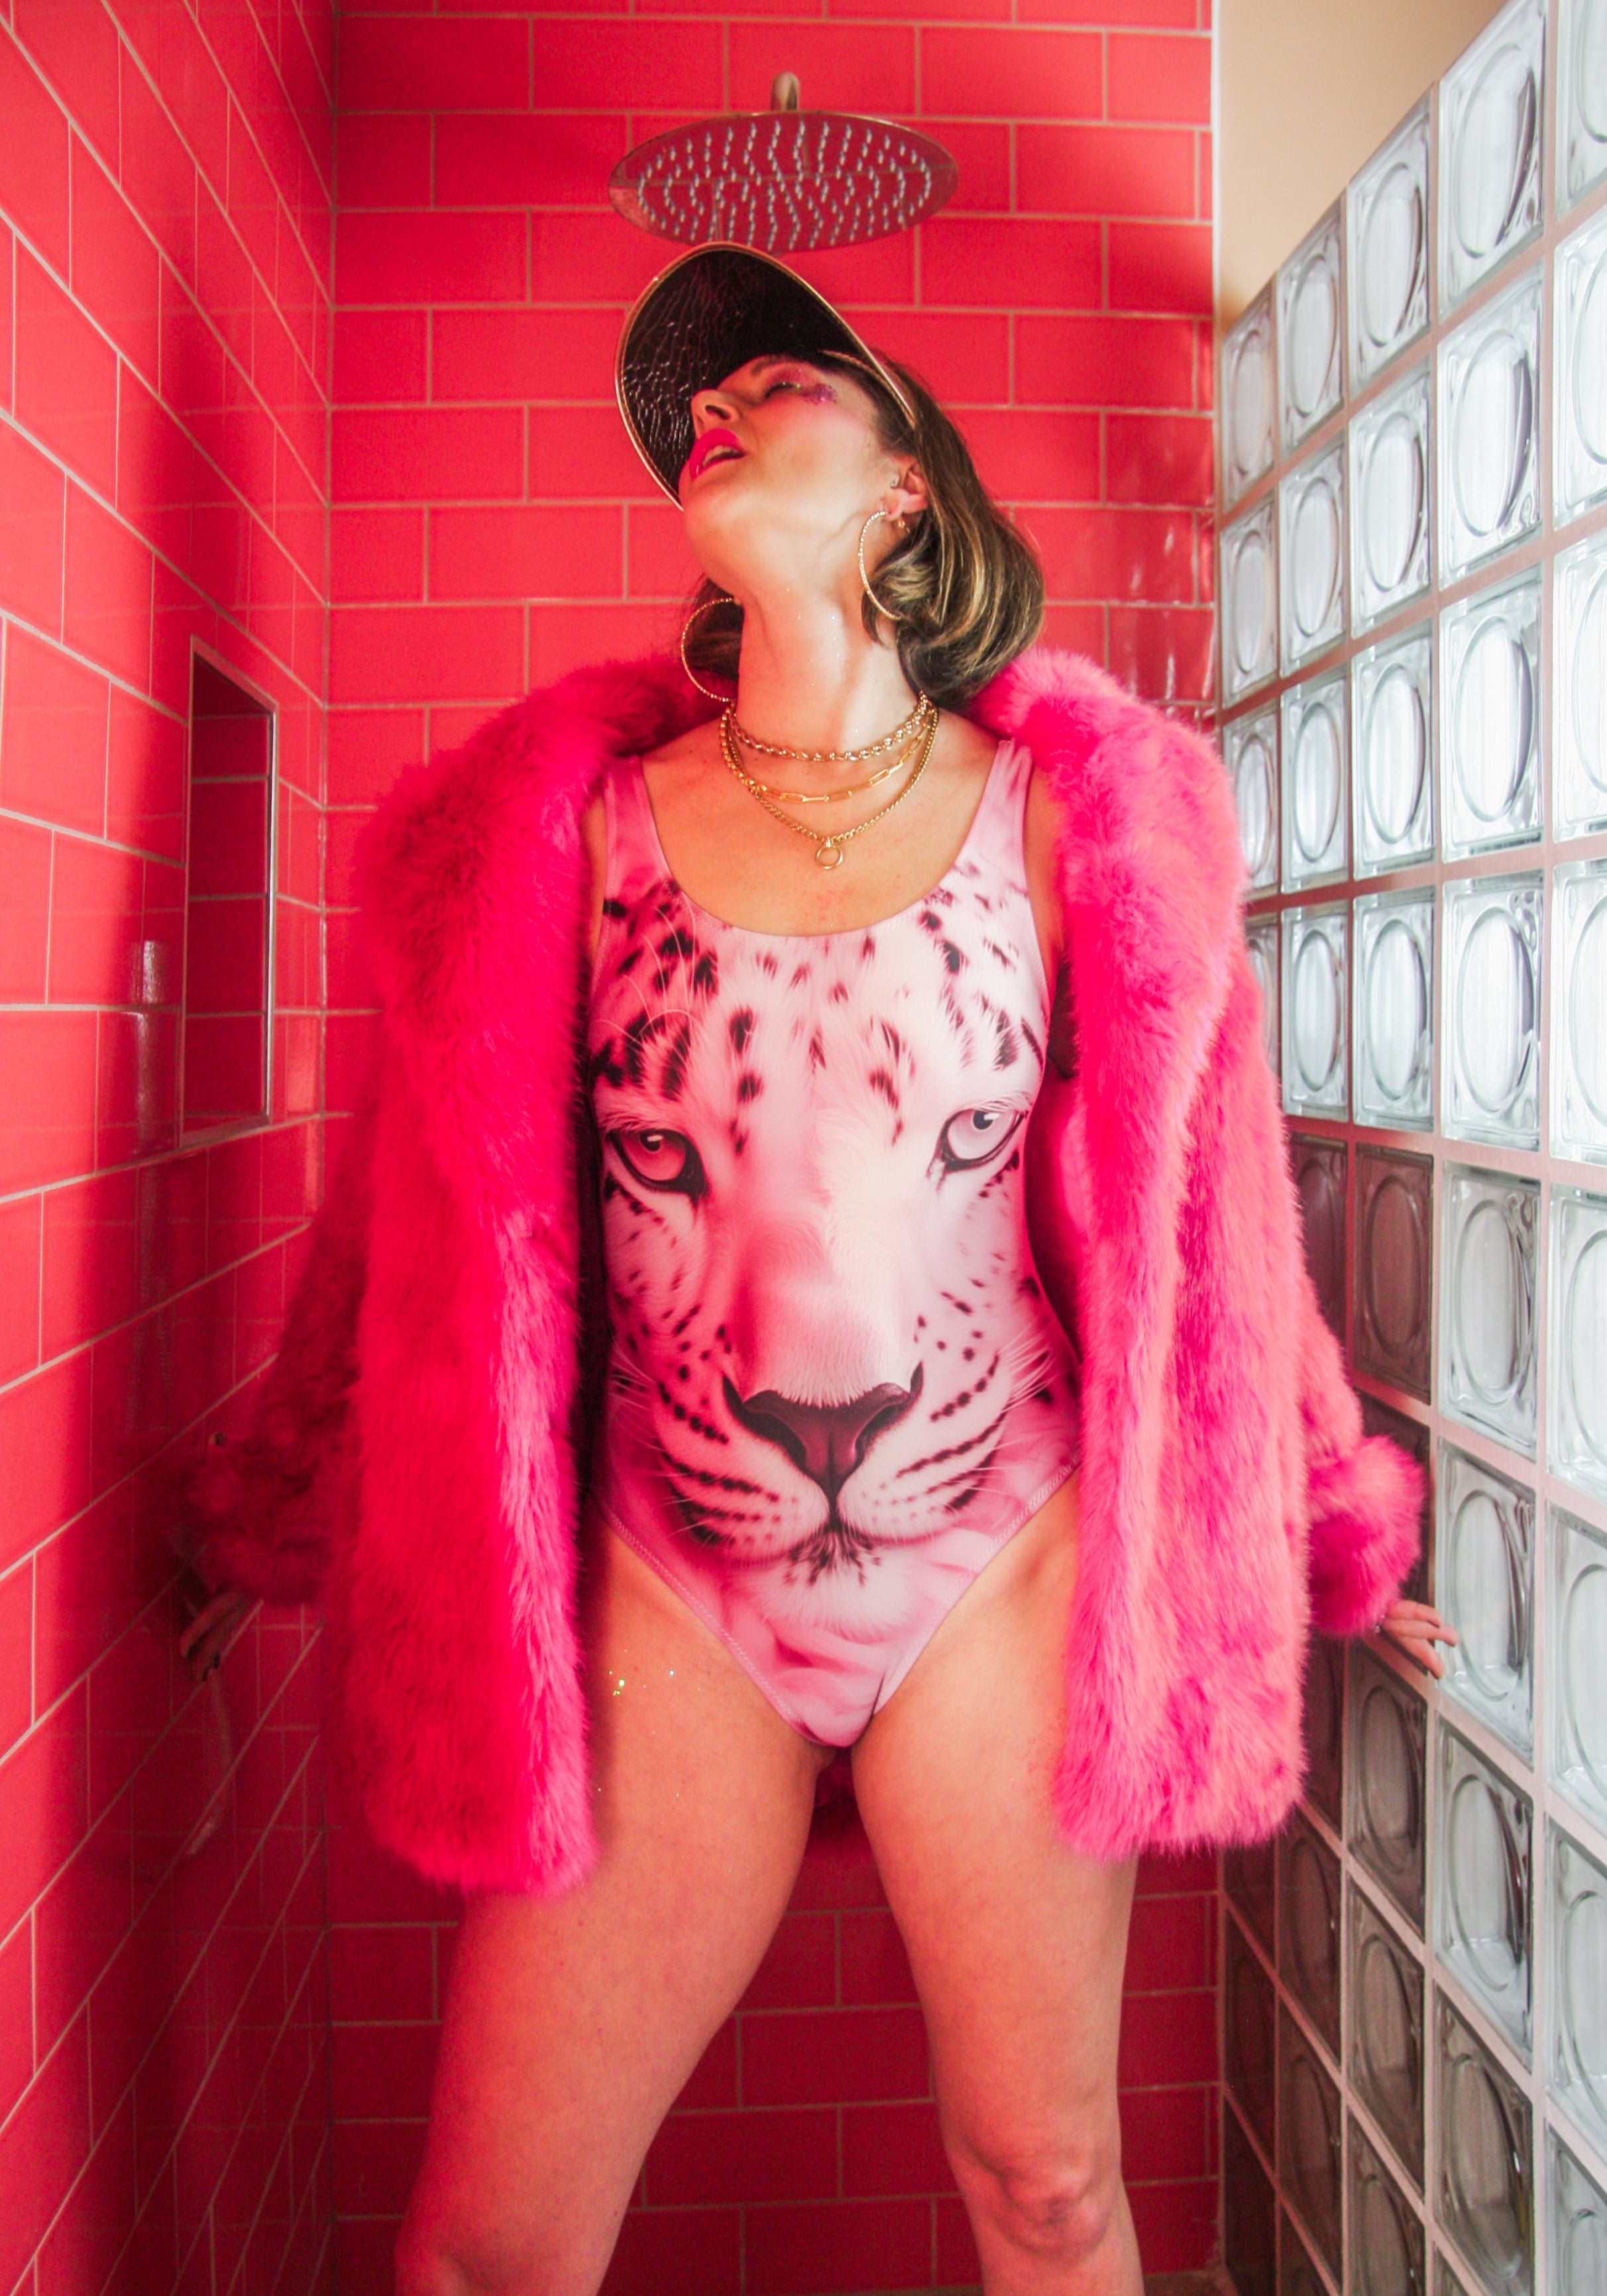 Pink Leopard Swimsuit